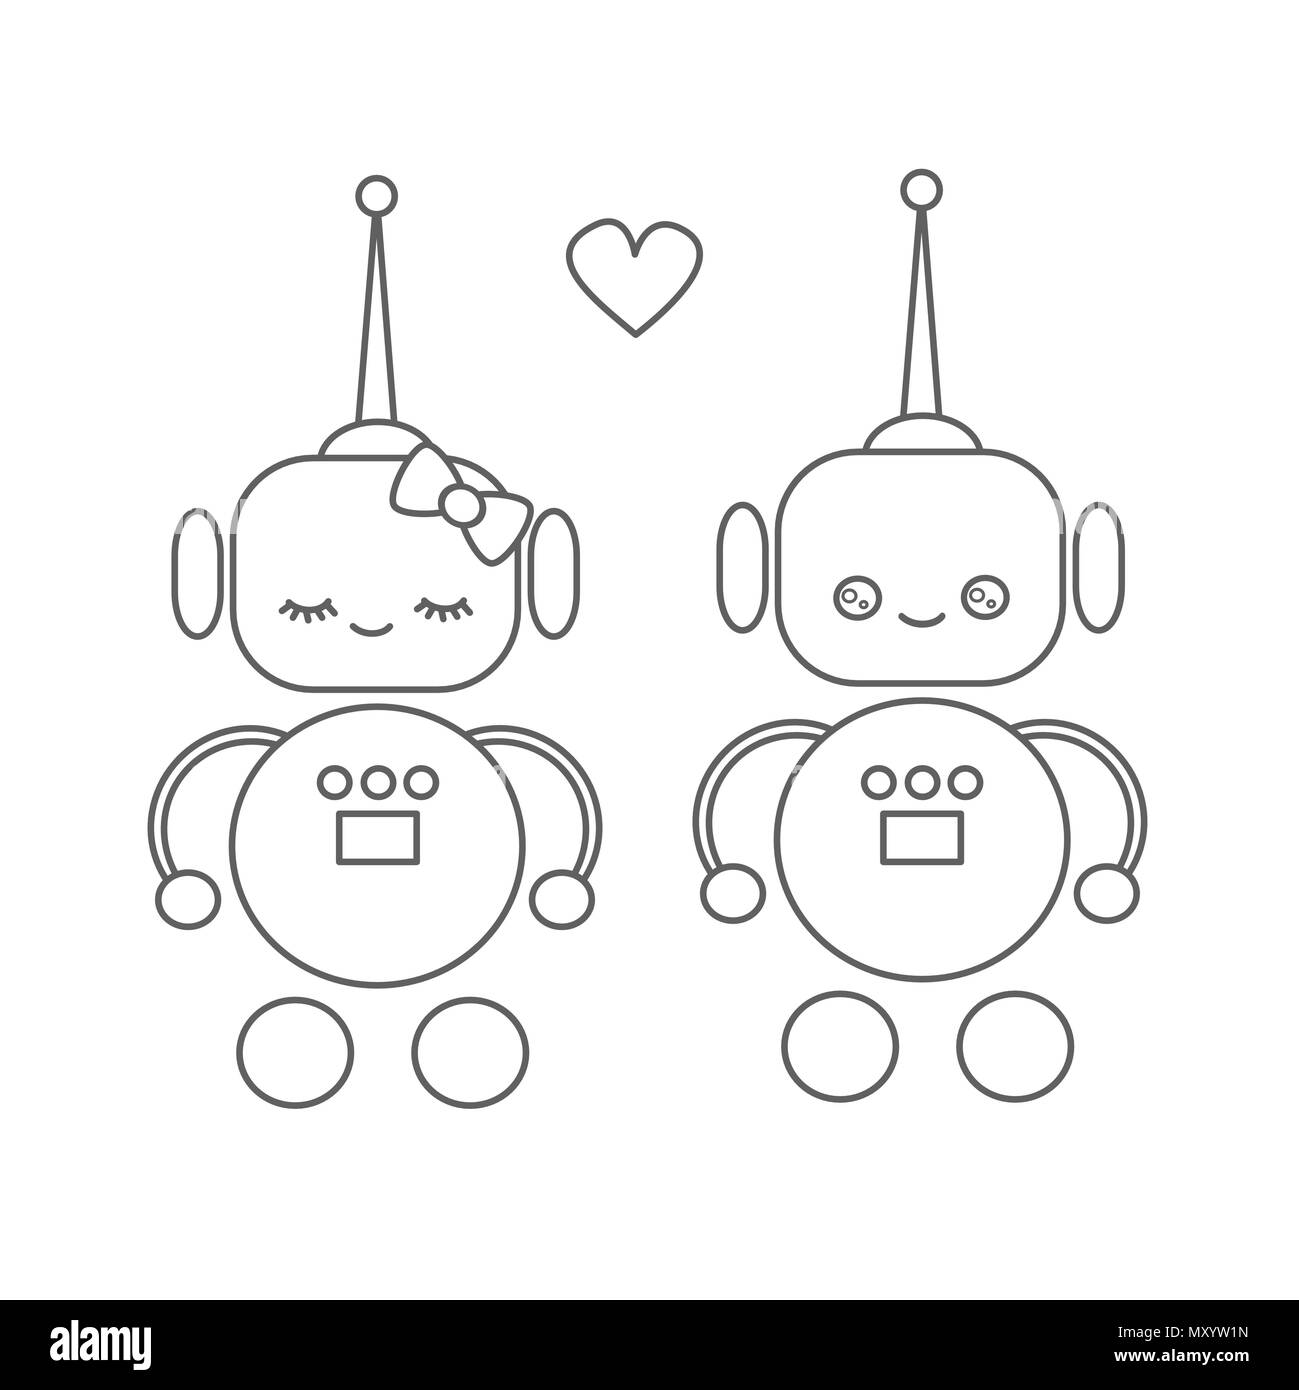 Cute cartoon Vektor Roboter in Liebe schwarz-weiß illustration Stock Vektor